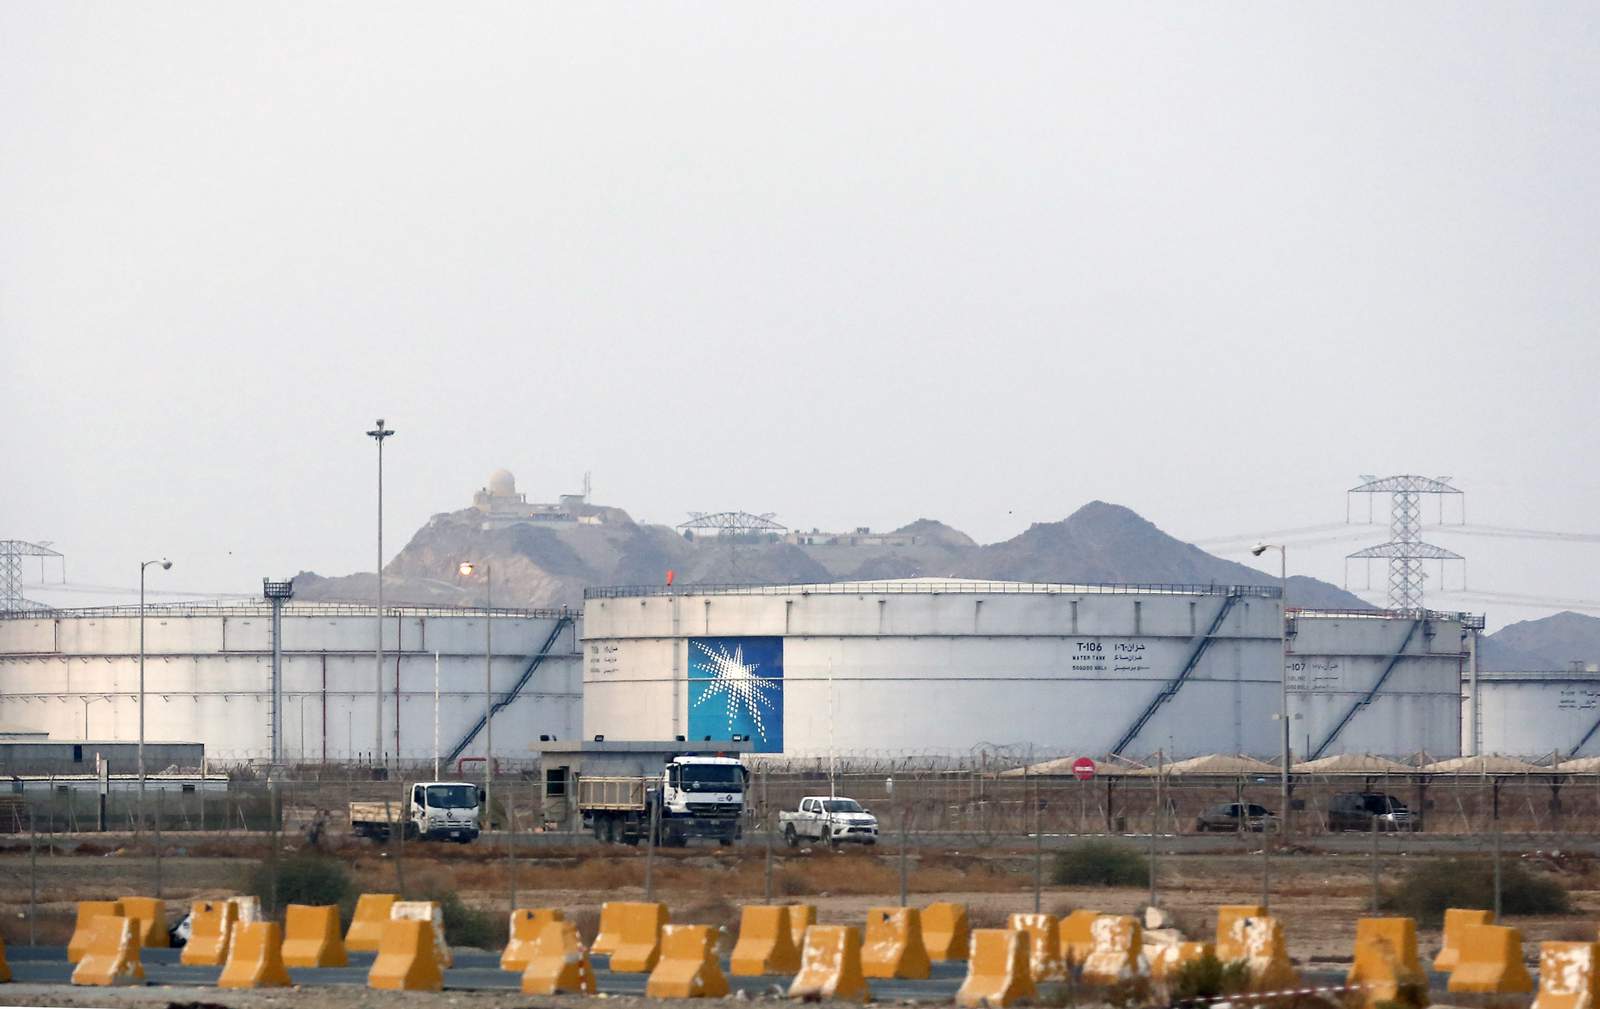 Yemen rebels claim Saudi oil facility hit; no damage seen